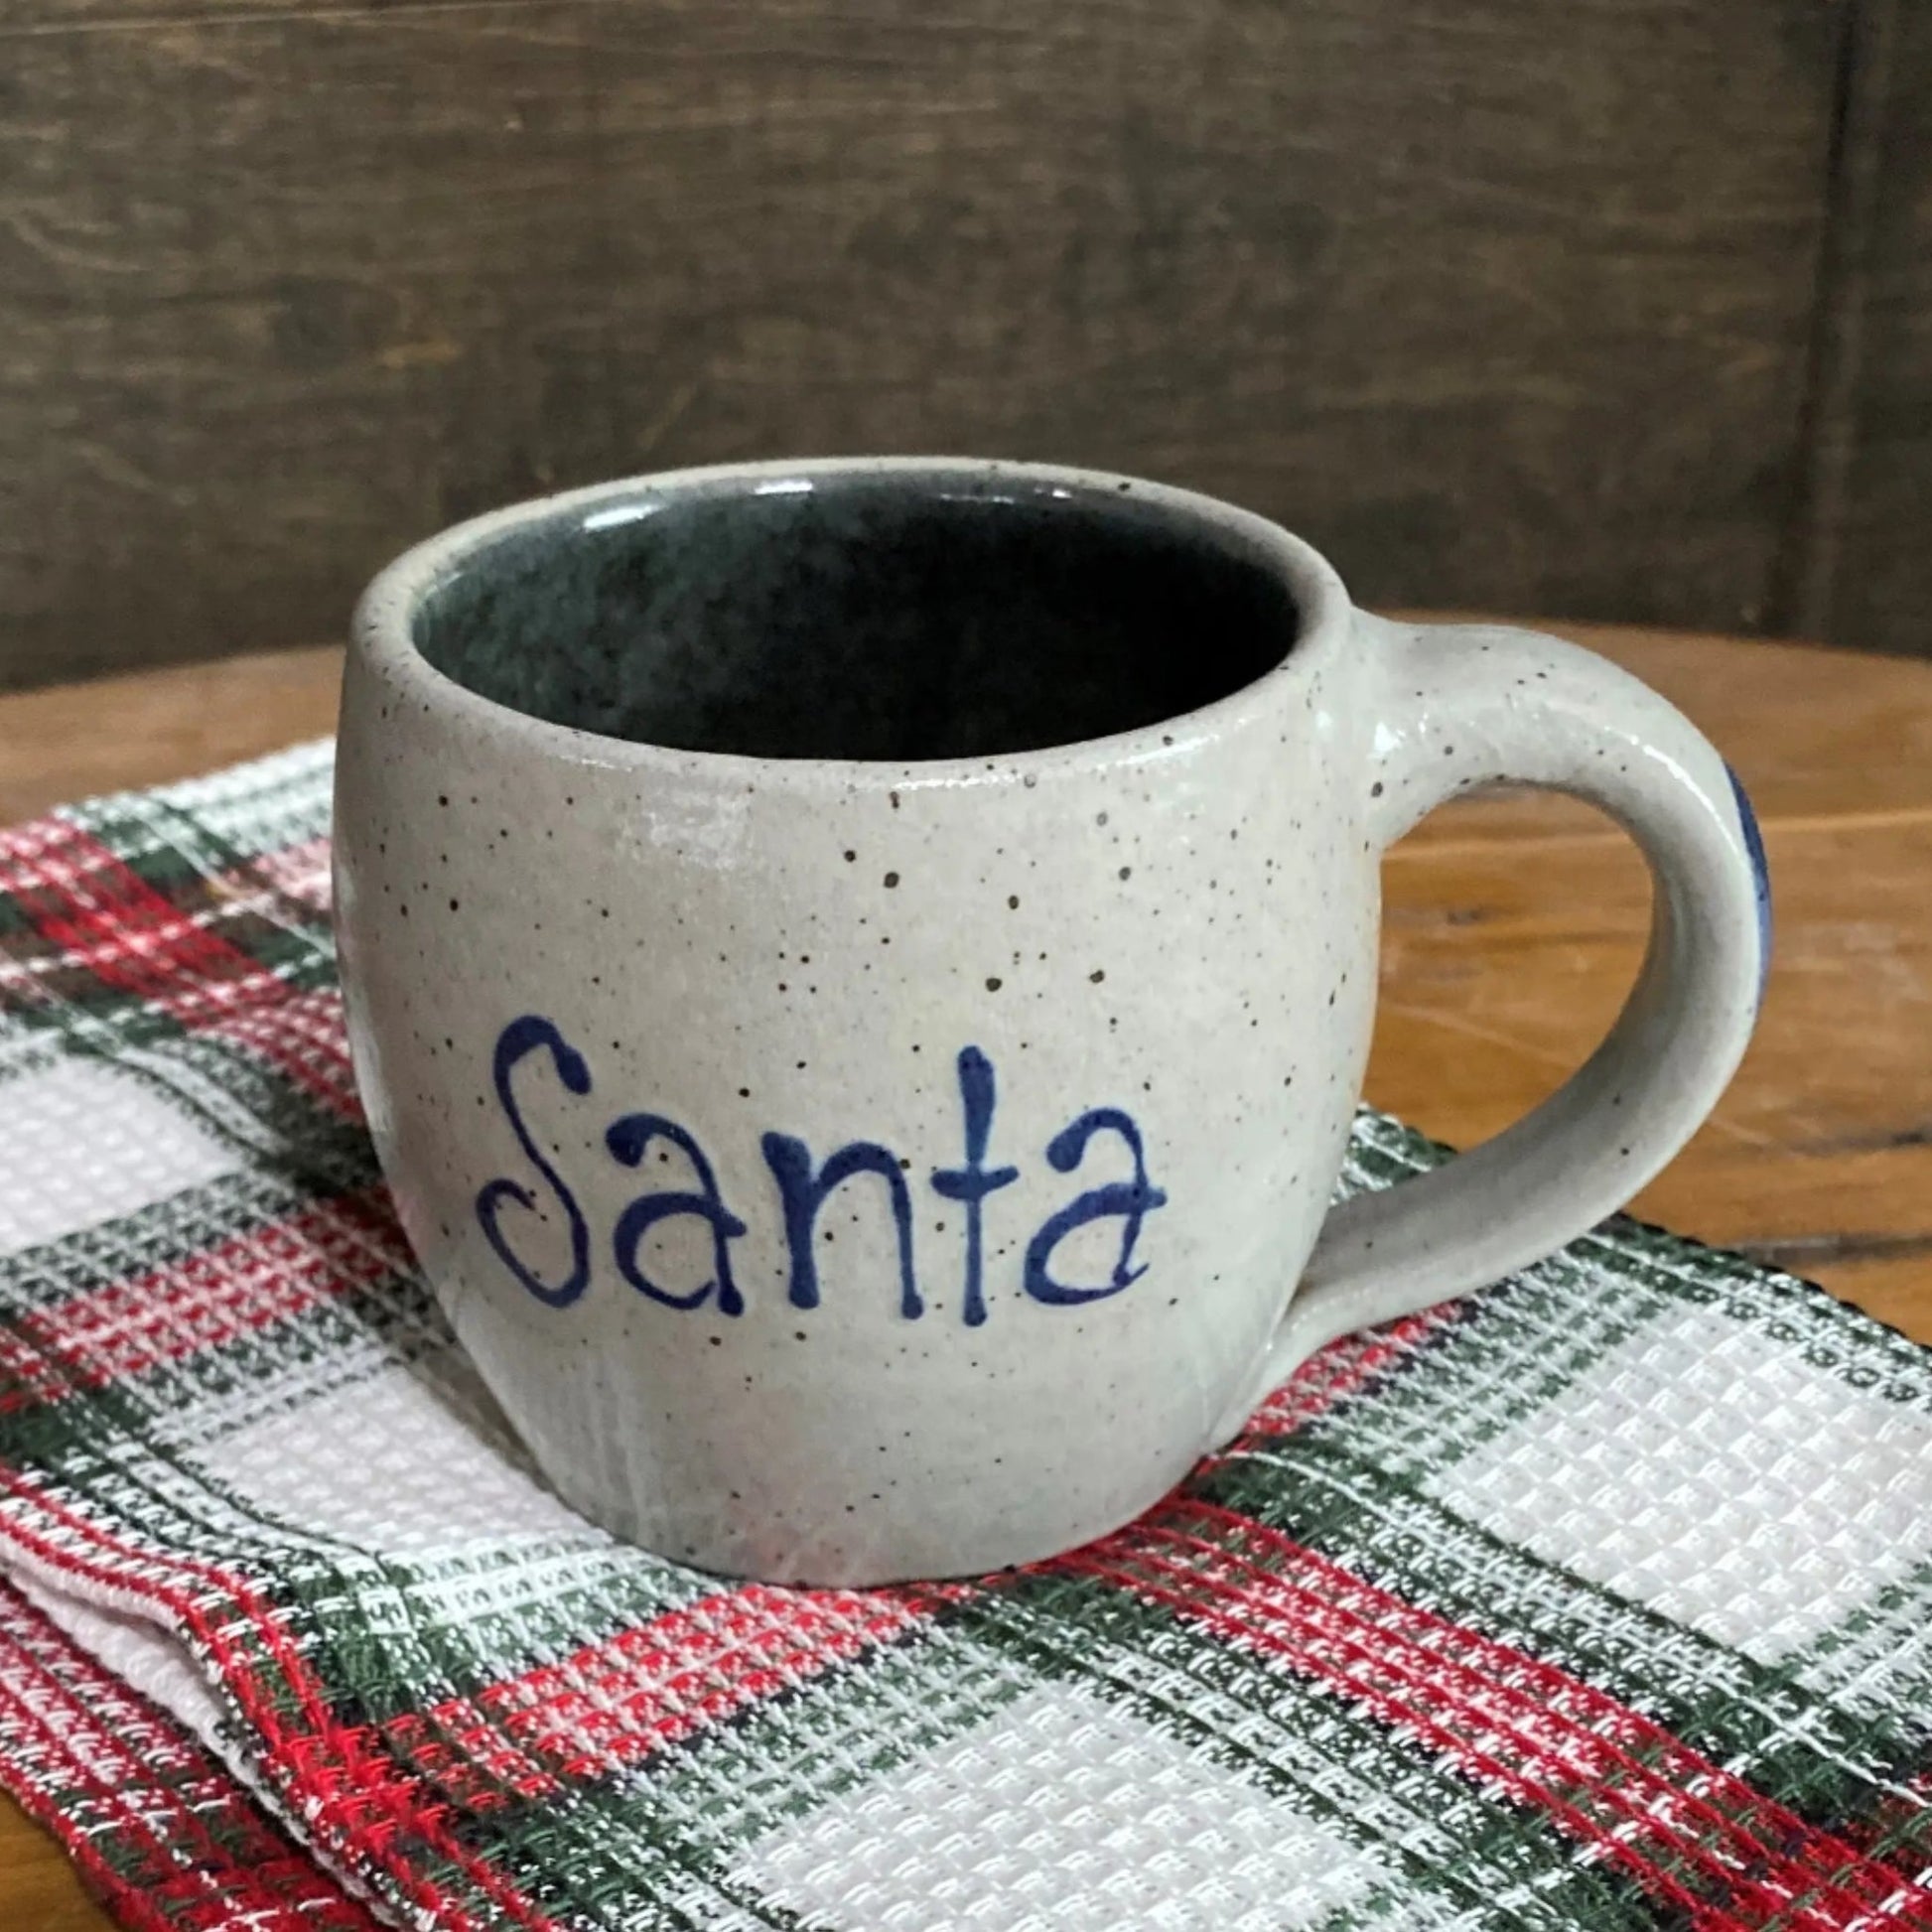 Santa's Pottery Cocoa Mug - Made in the USA